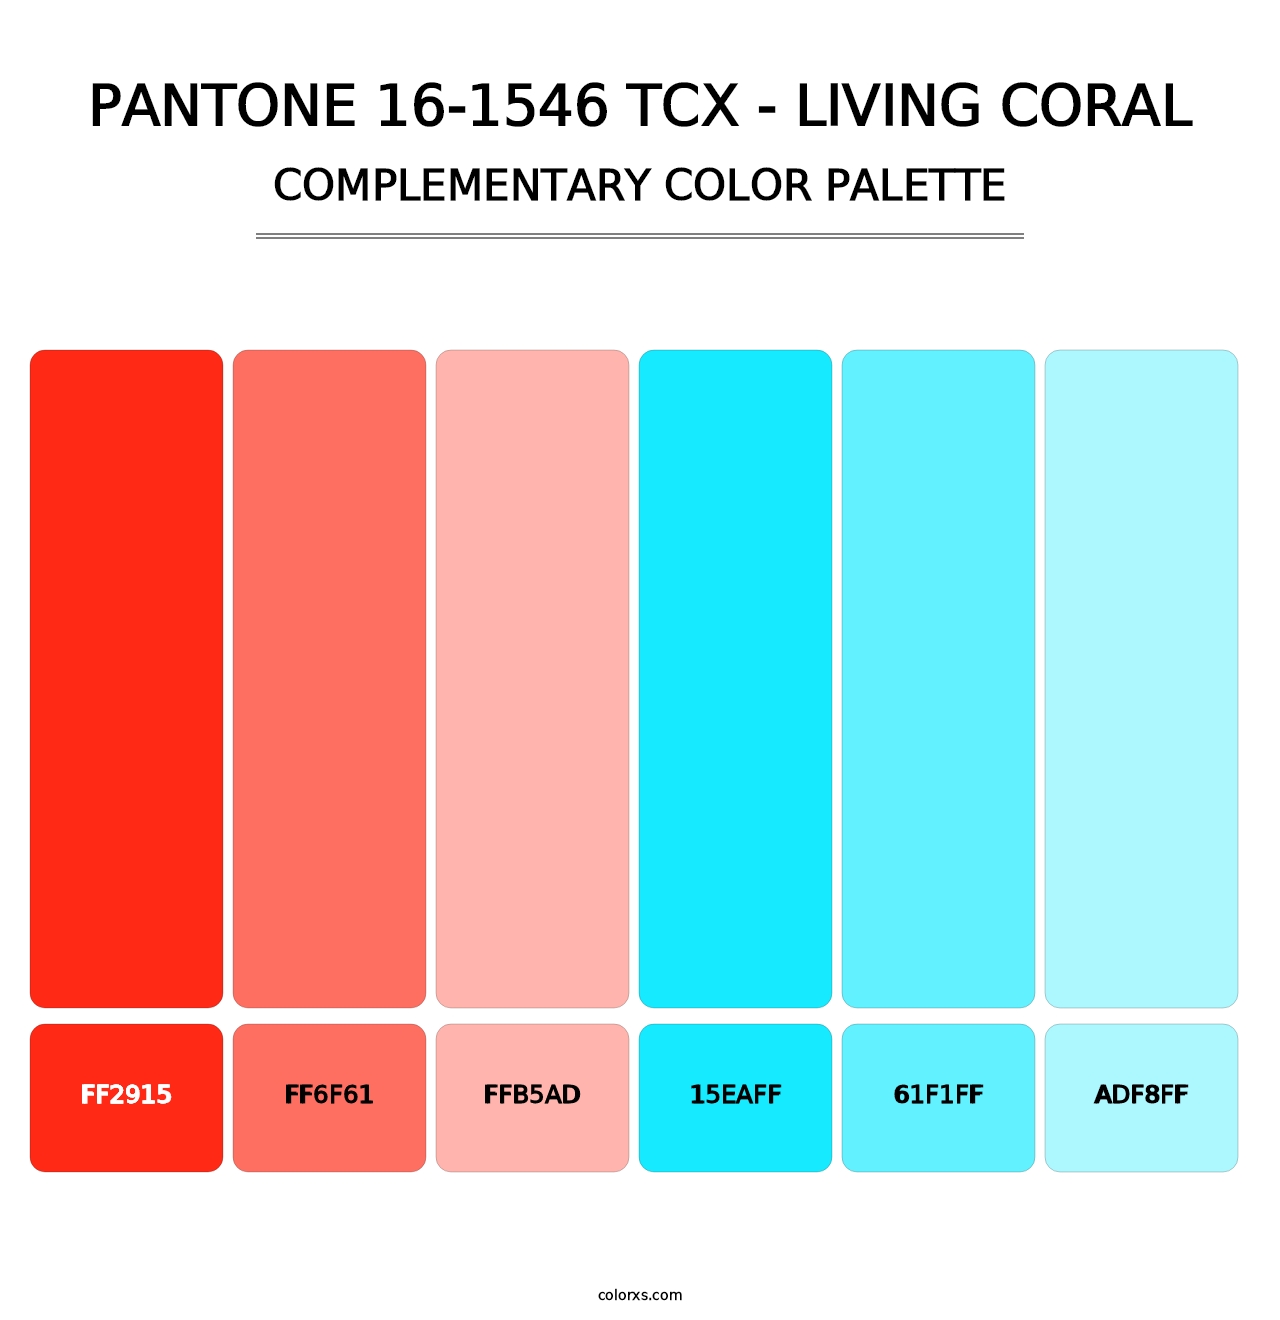 PANTONE 16-1546 TCX - Living Coral - Complementary Color Palette